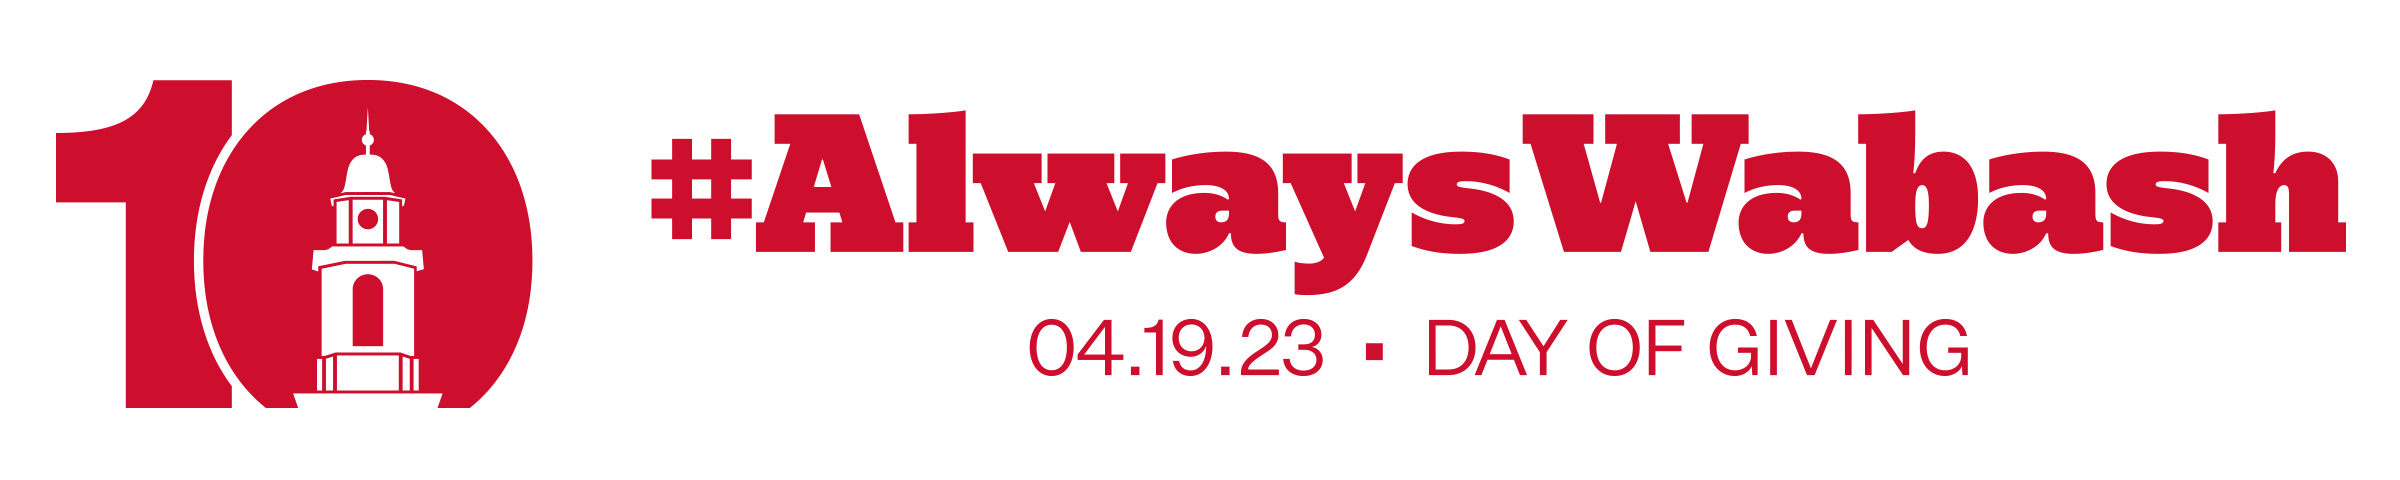 Wabash 10th Day of Giving - 04.19.23 - #AlwaysWabash